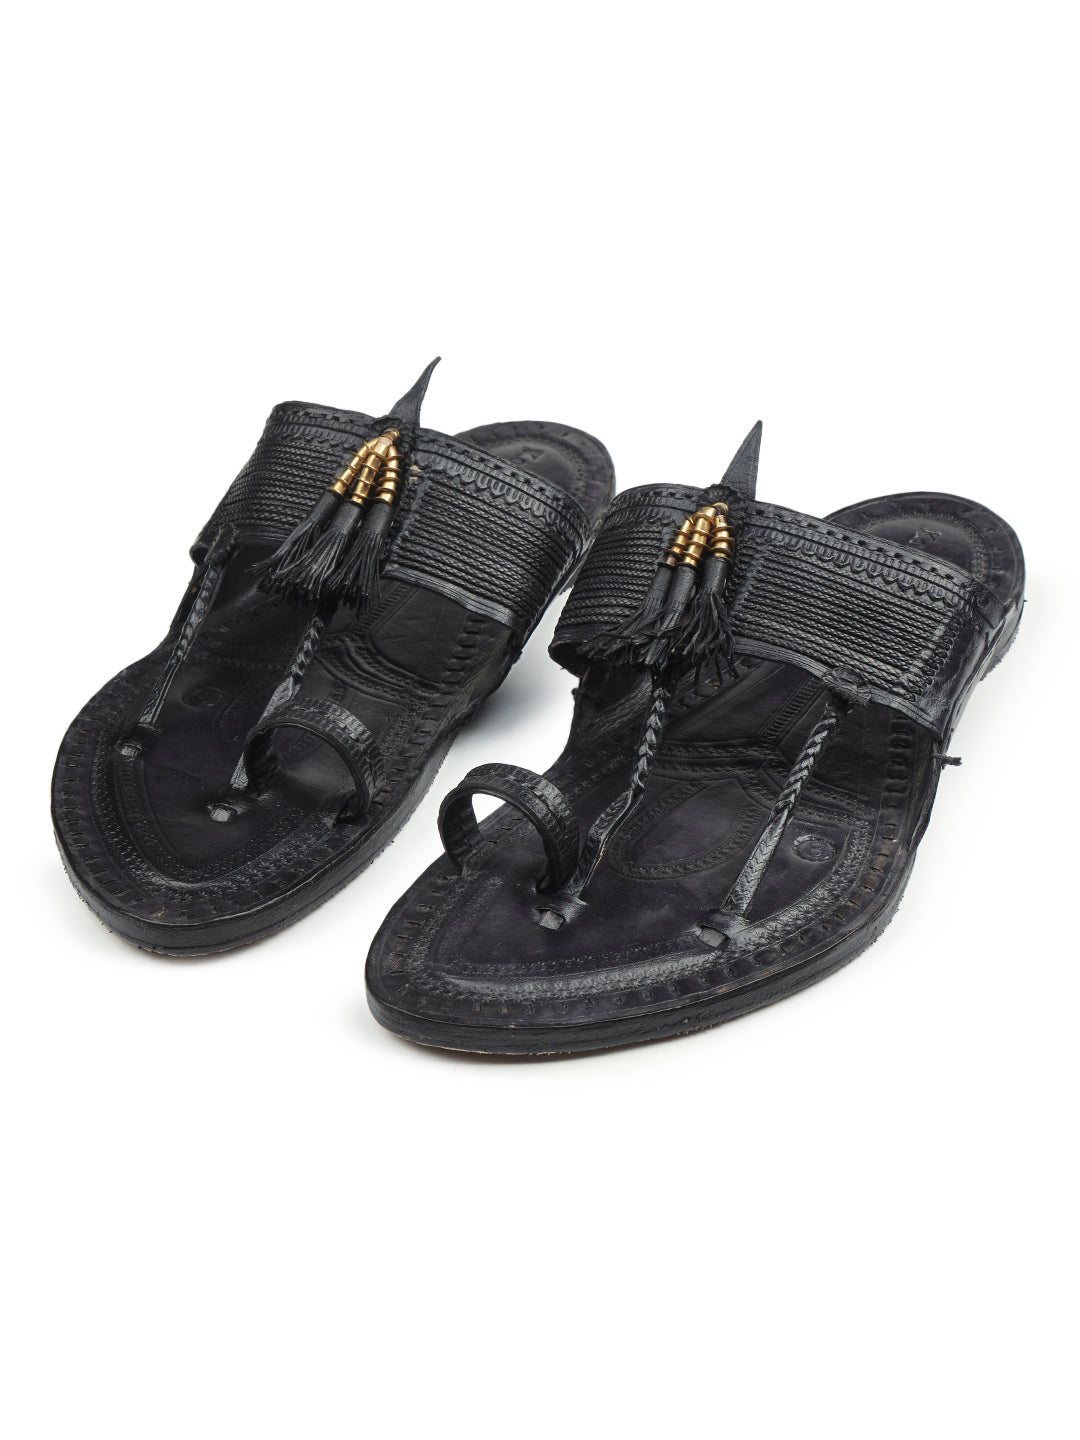 Buy Men's Leather Sandals, Kolhapuri Chappal, Mens Tan Sandals, Mens Indian  Sandals, Kolhapuri Sandals, Mens Strappy Sandals, Braided Sandals Online in  India - Etsy